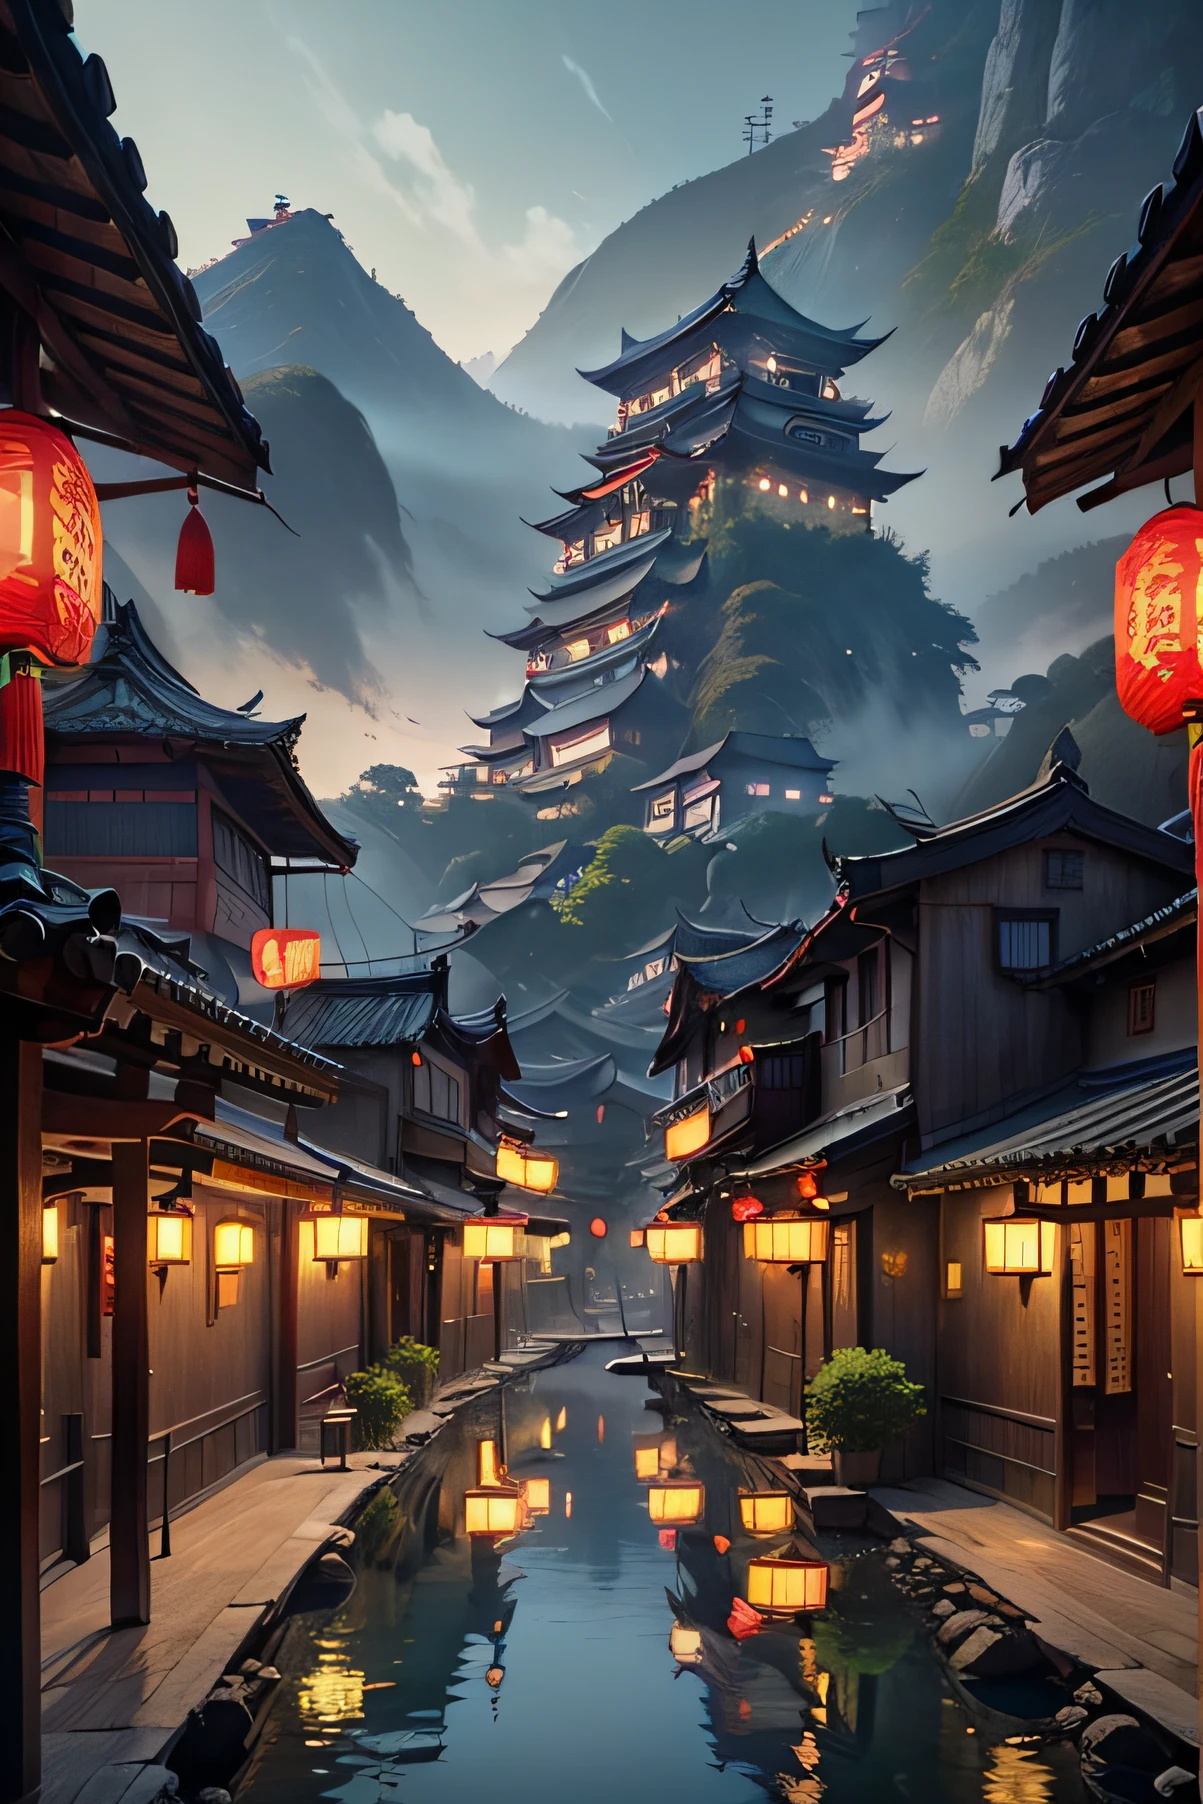 arafed view of a หมู่บ้านจีน at midnight with a lot of lights, เมืองจีนในฝัน, ancient สถาปัตยกรรมจีน, ปราสาทโบราณของจีนไซเบอร์พังค์, สถาปัตยกรรมจีน, เมืองญี่ปุ่น, เมืองญี่ปุ่น, หมู่บ้านจีน, การแสดงราชวงศ์ถังที่สวยงาม, สถาปัตยกรรมญี่ปุ่นโบราณ, เหมือนจิ่วเฟิ่น, สไตล์แอนเดรีย โรชา, สไตล์จีน, หมู่บ้านญี่ปุ่น.